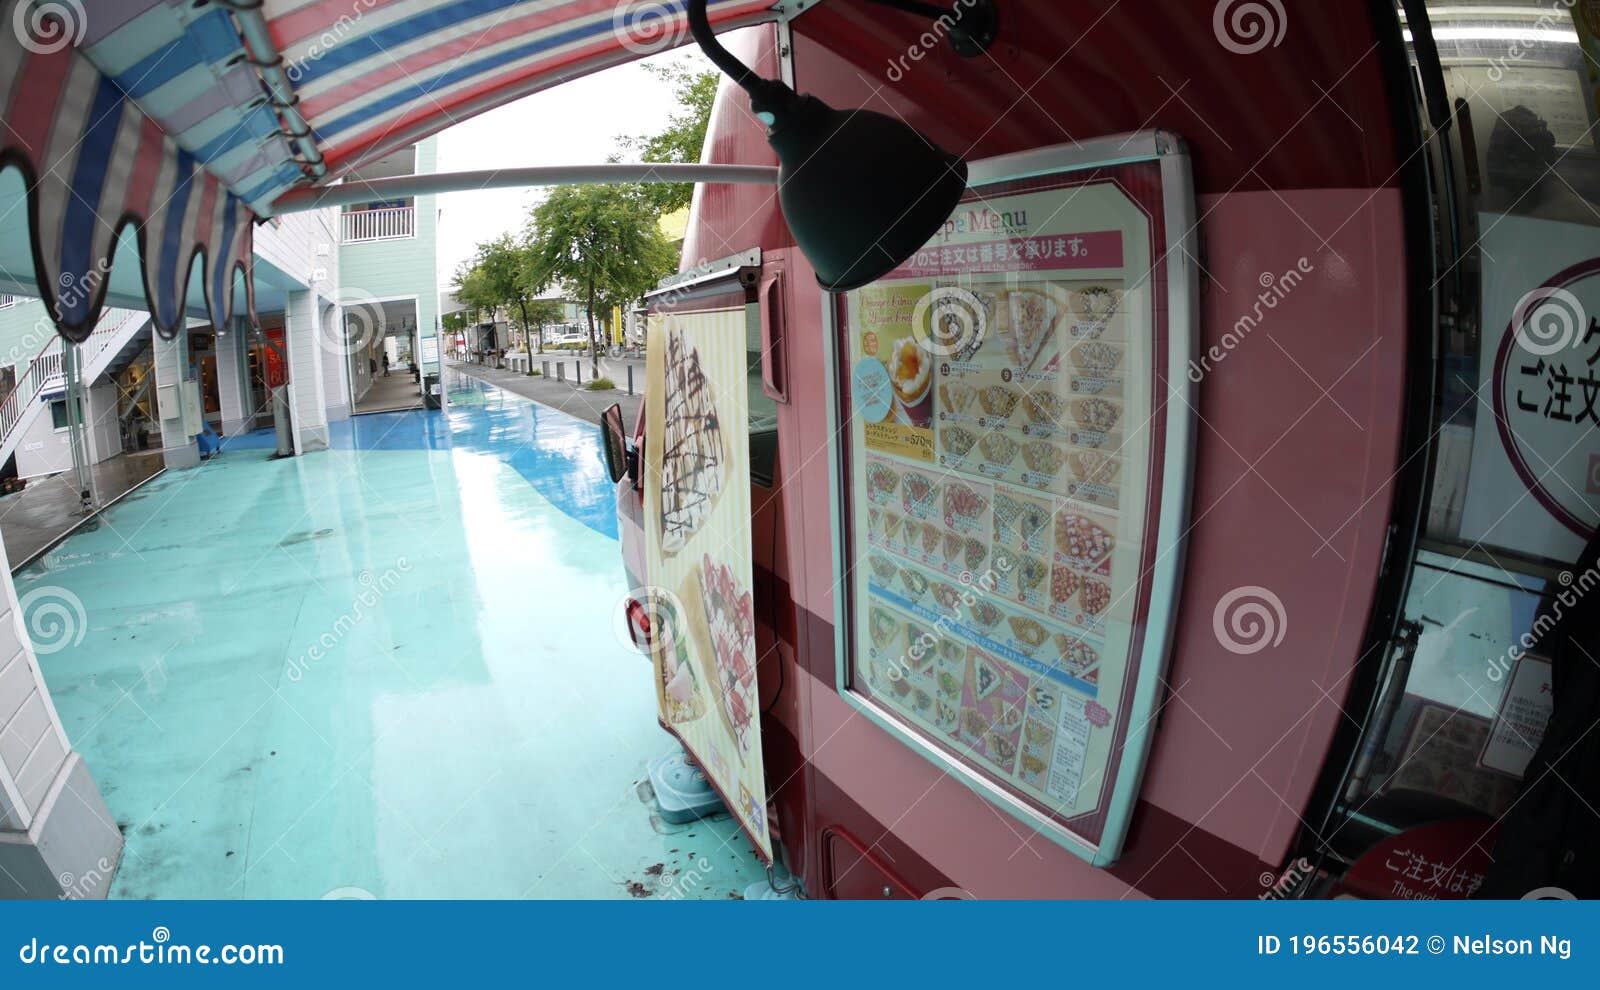 Mitsui Outlet Park Yokohama Bayside Erbjuder Gott Om Shopping Restaurangants Nara Smabatshamnen Redaktionell Arkivbild Bild Av Affar Detaljhandel